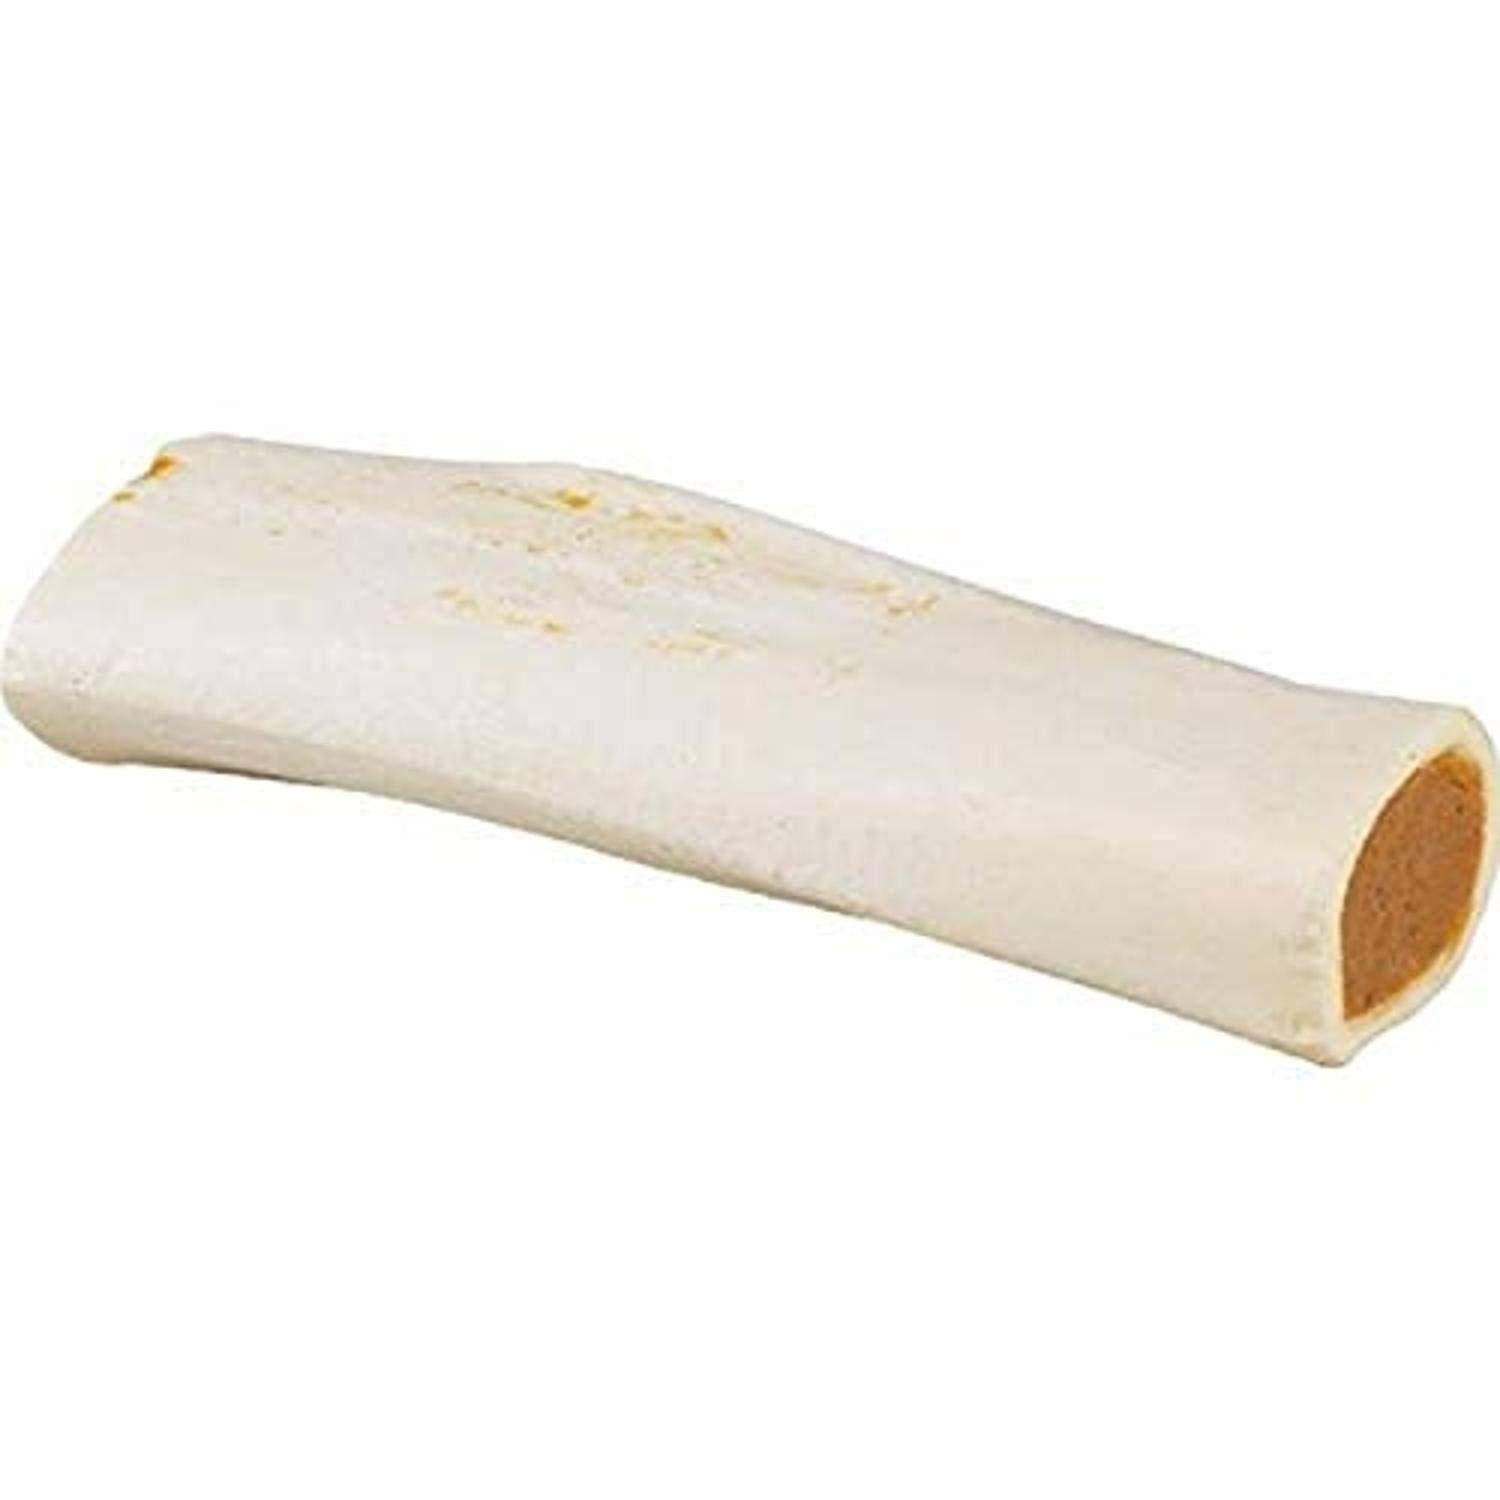 Redbarn Premium Pet Products Filled Bone Dog Treat - Peanut Butter, 6"